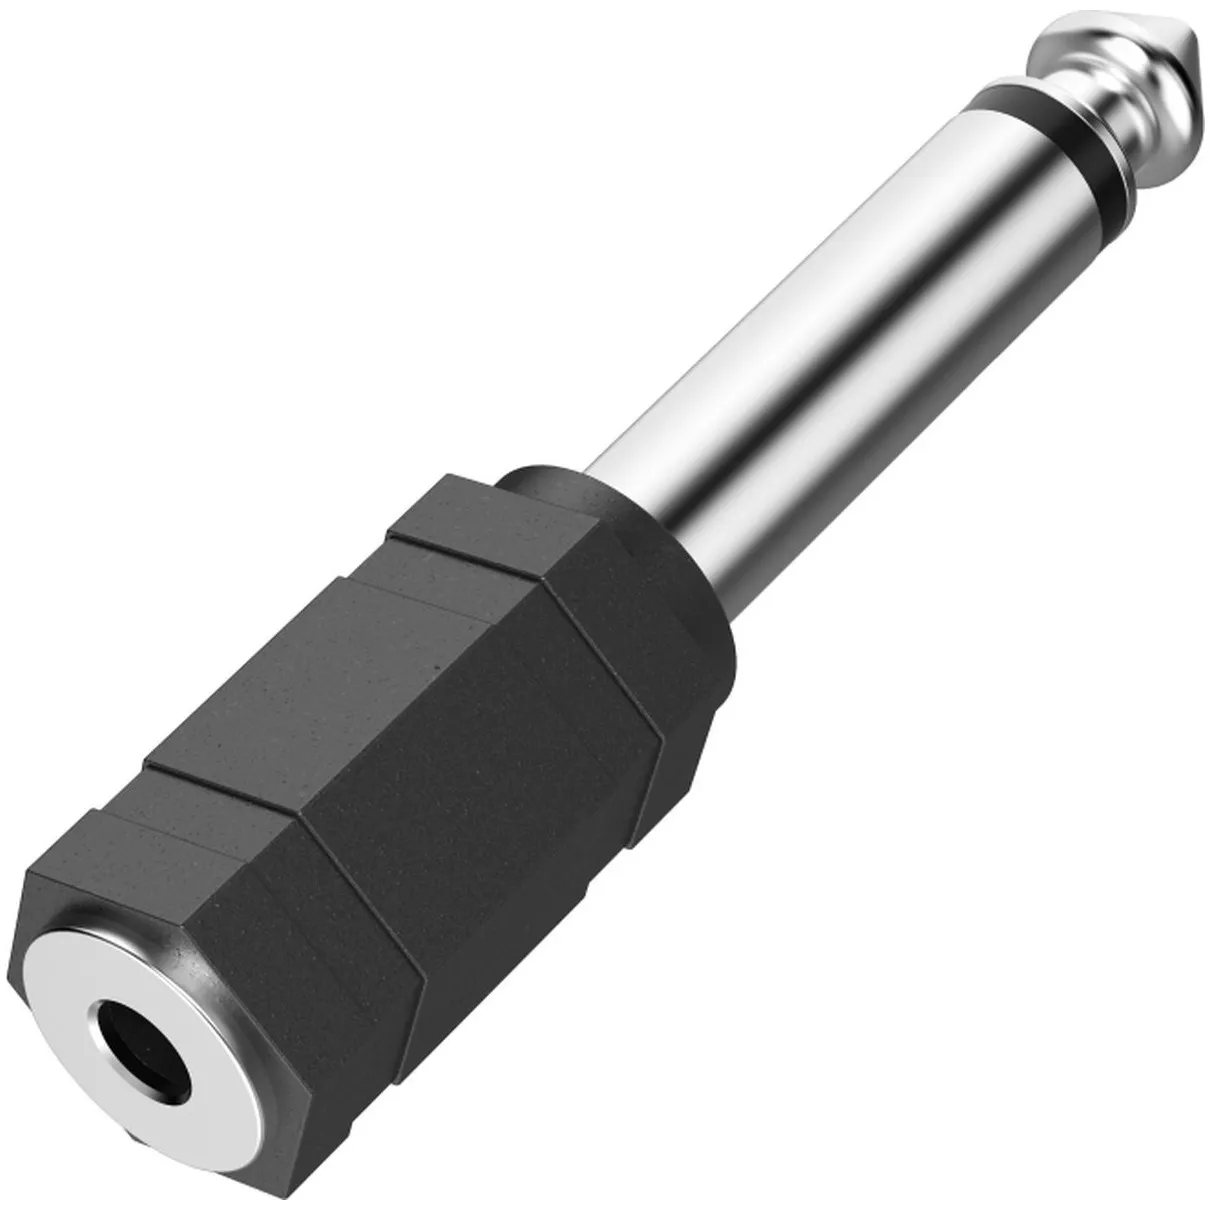 Hama Audio-adapter, 3,5mm jack koppeling mono - 6,3mm jack stekker mono